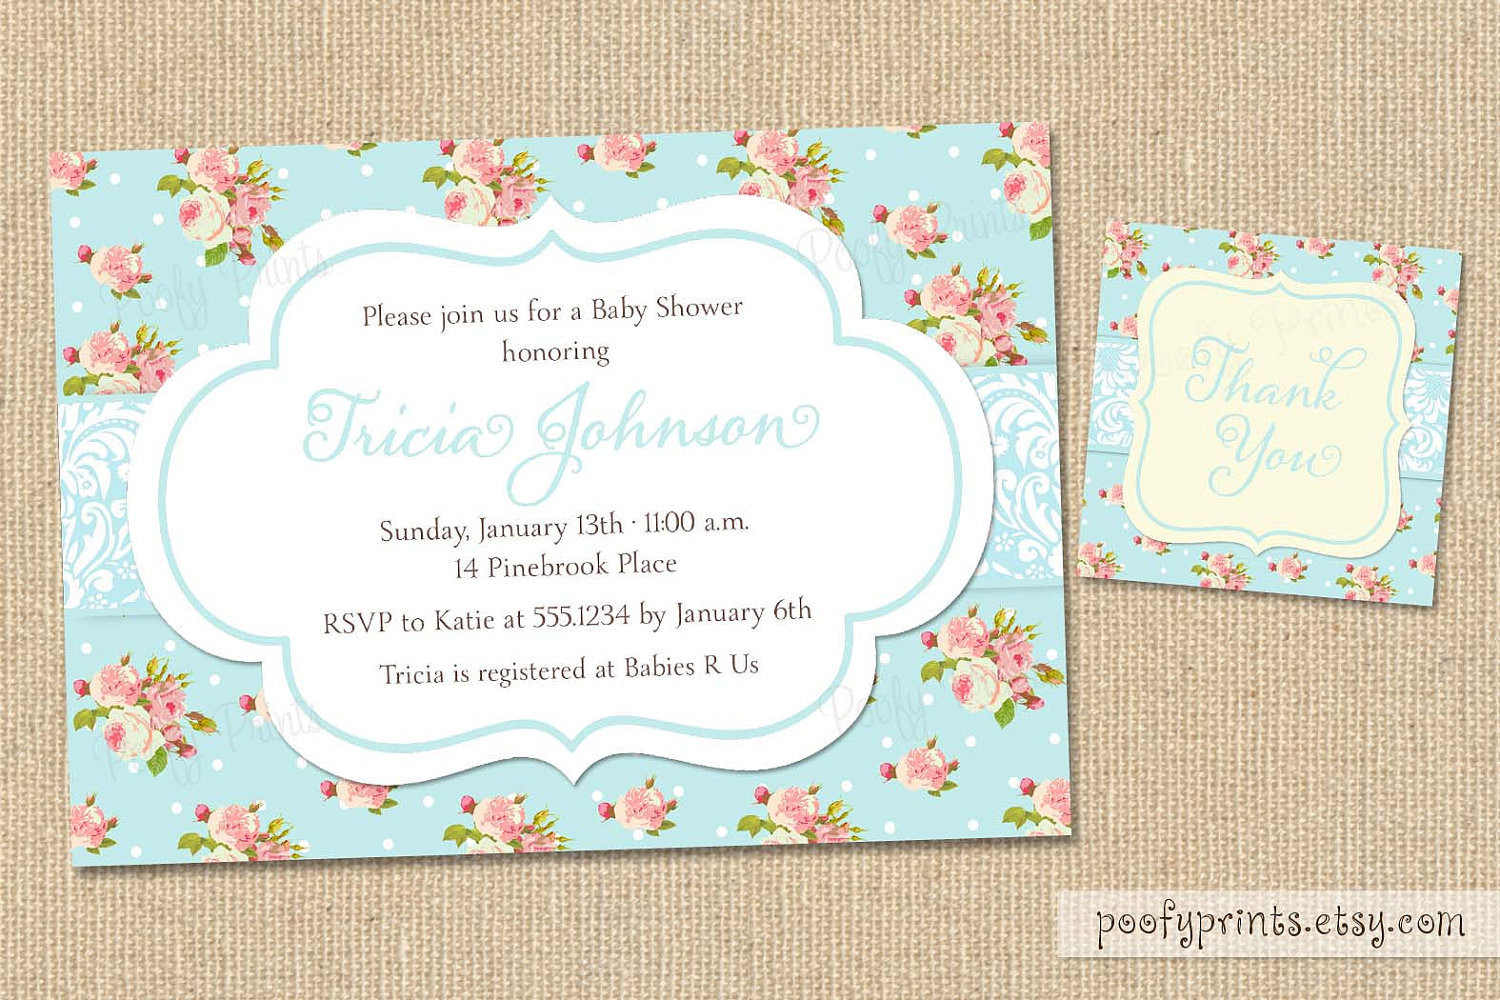 DIY Baby Shower Invitations Free
 Shabby Chic Baby Shower Invitations DIY Printable by